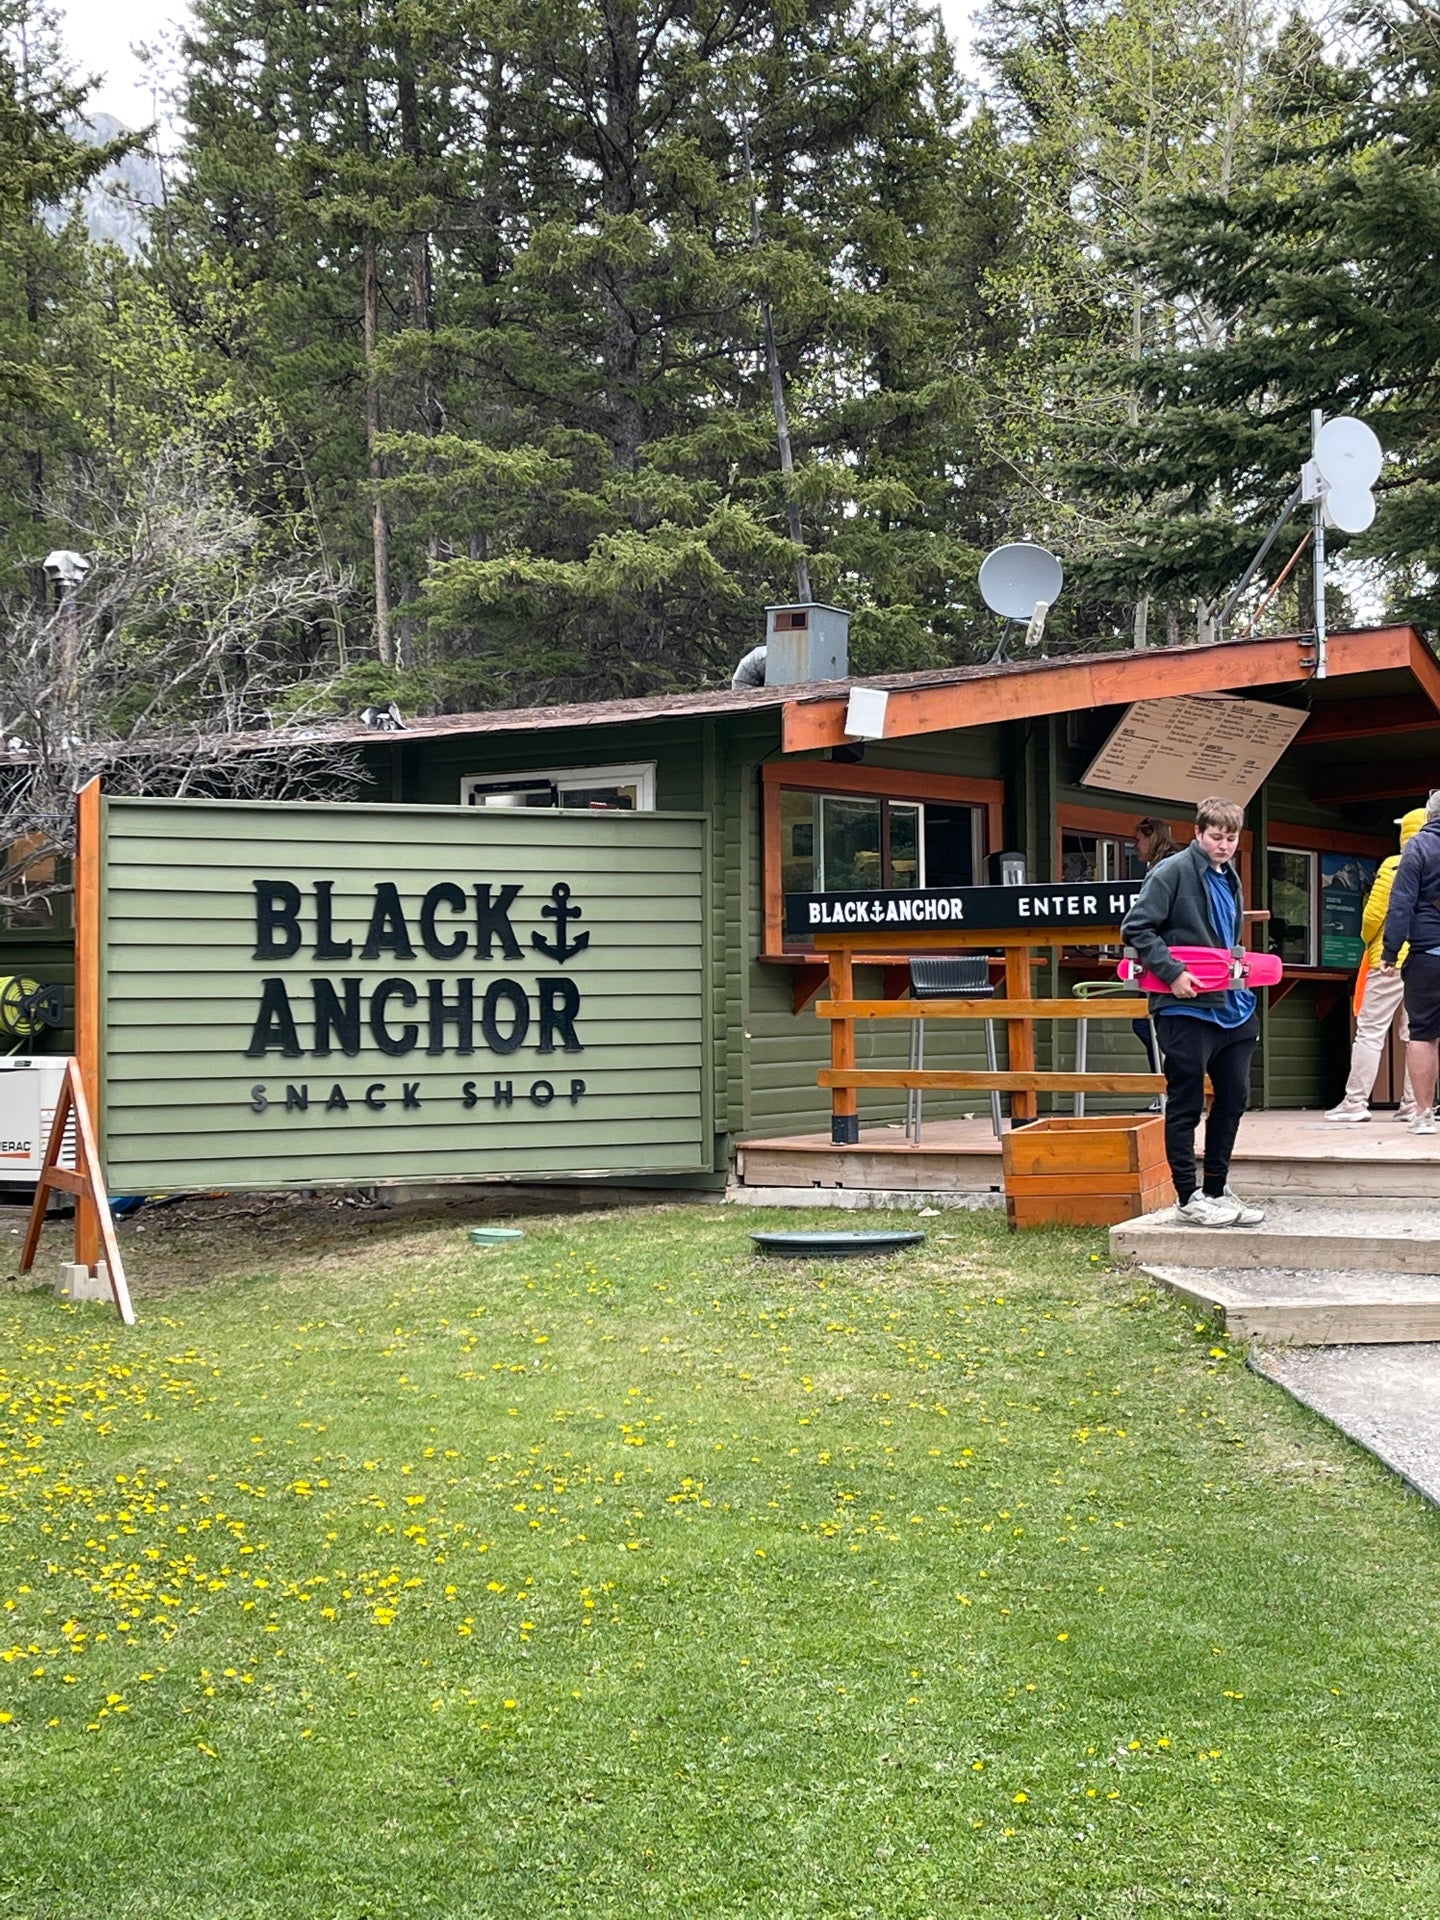 Black Anchor Snack Shop